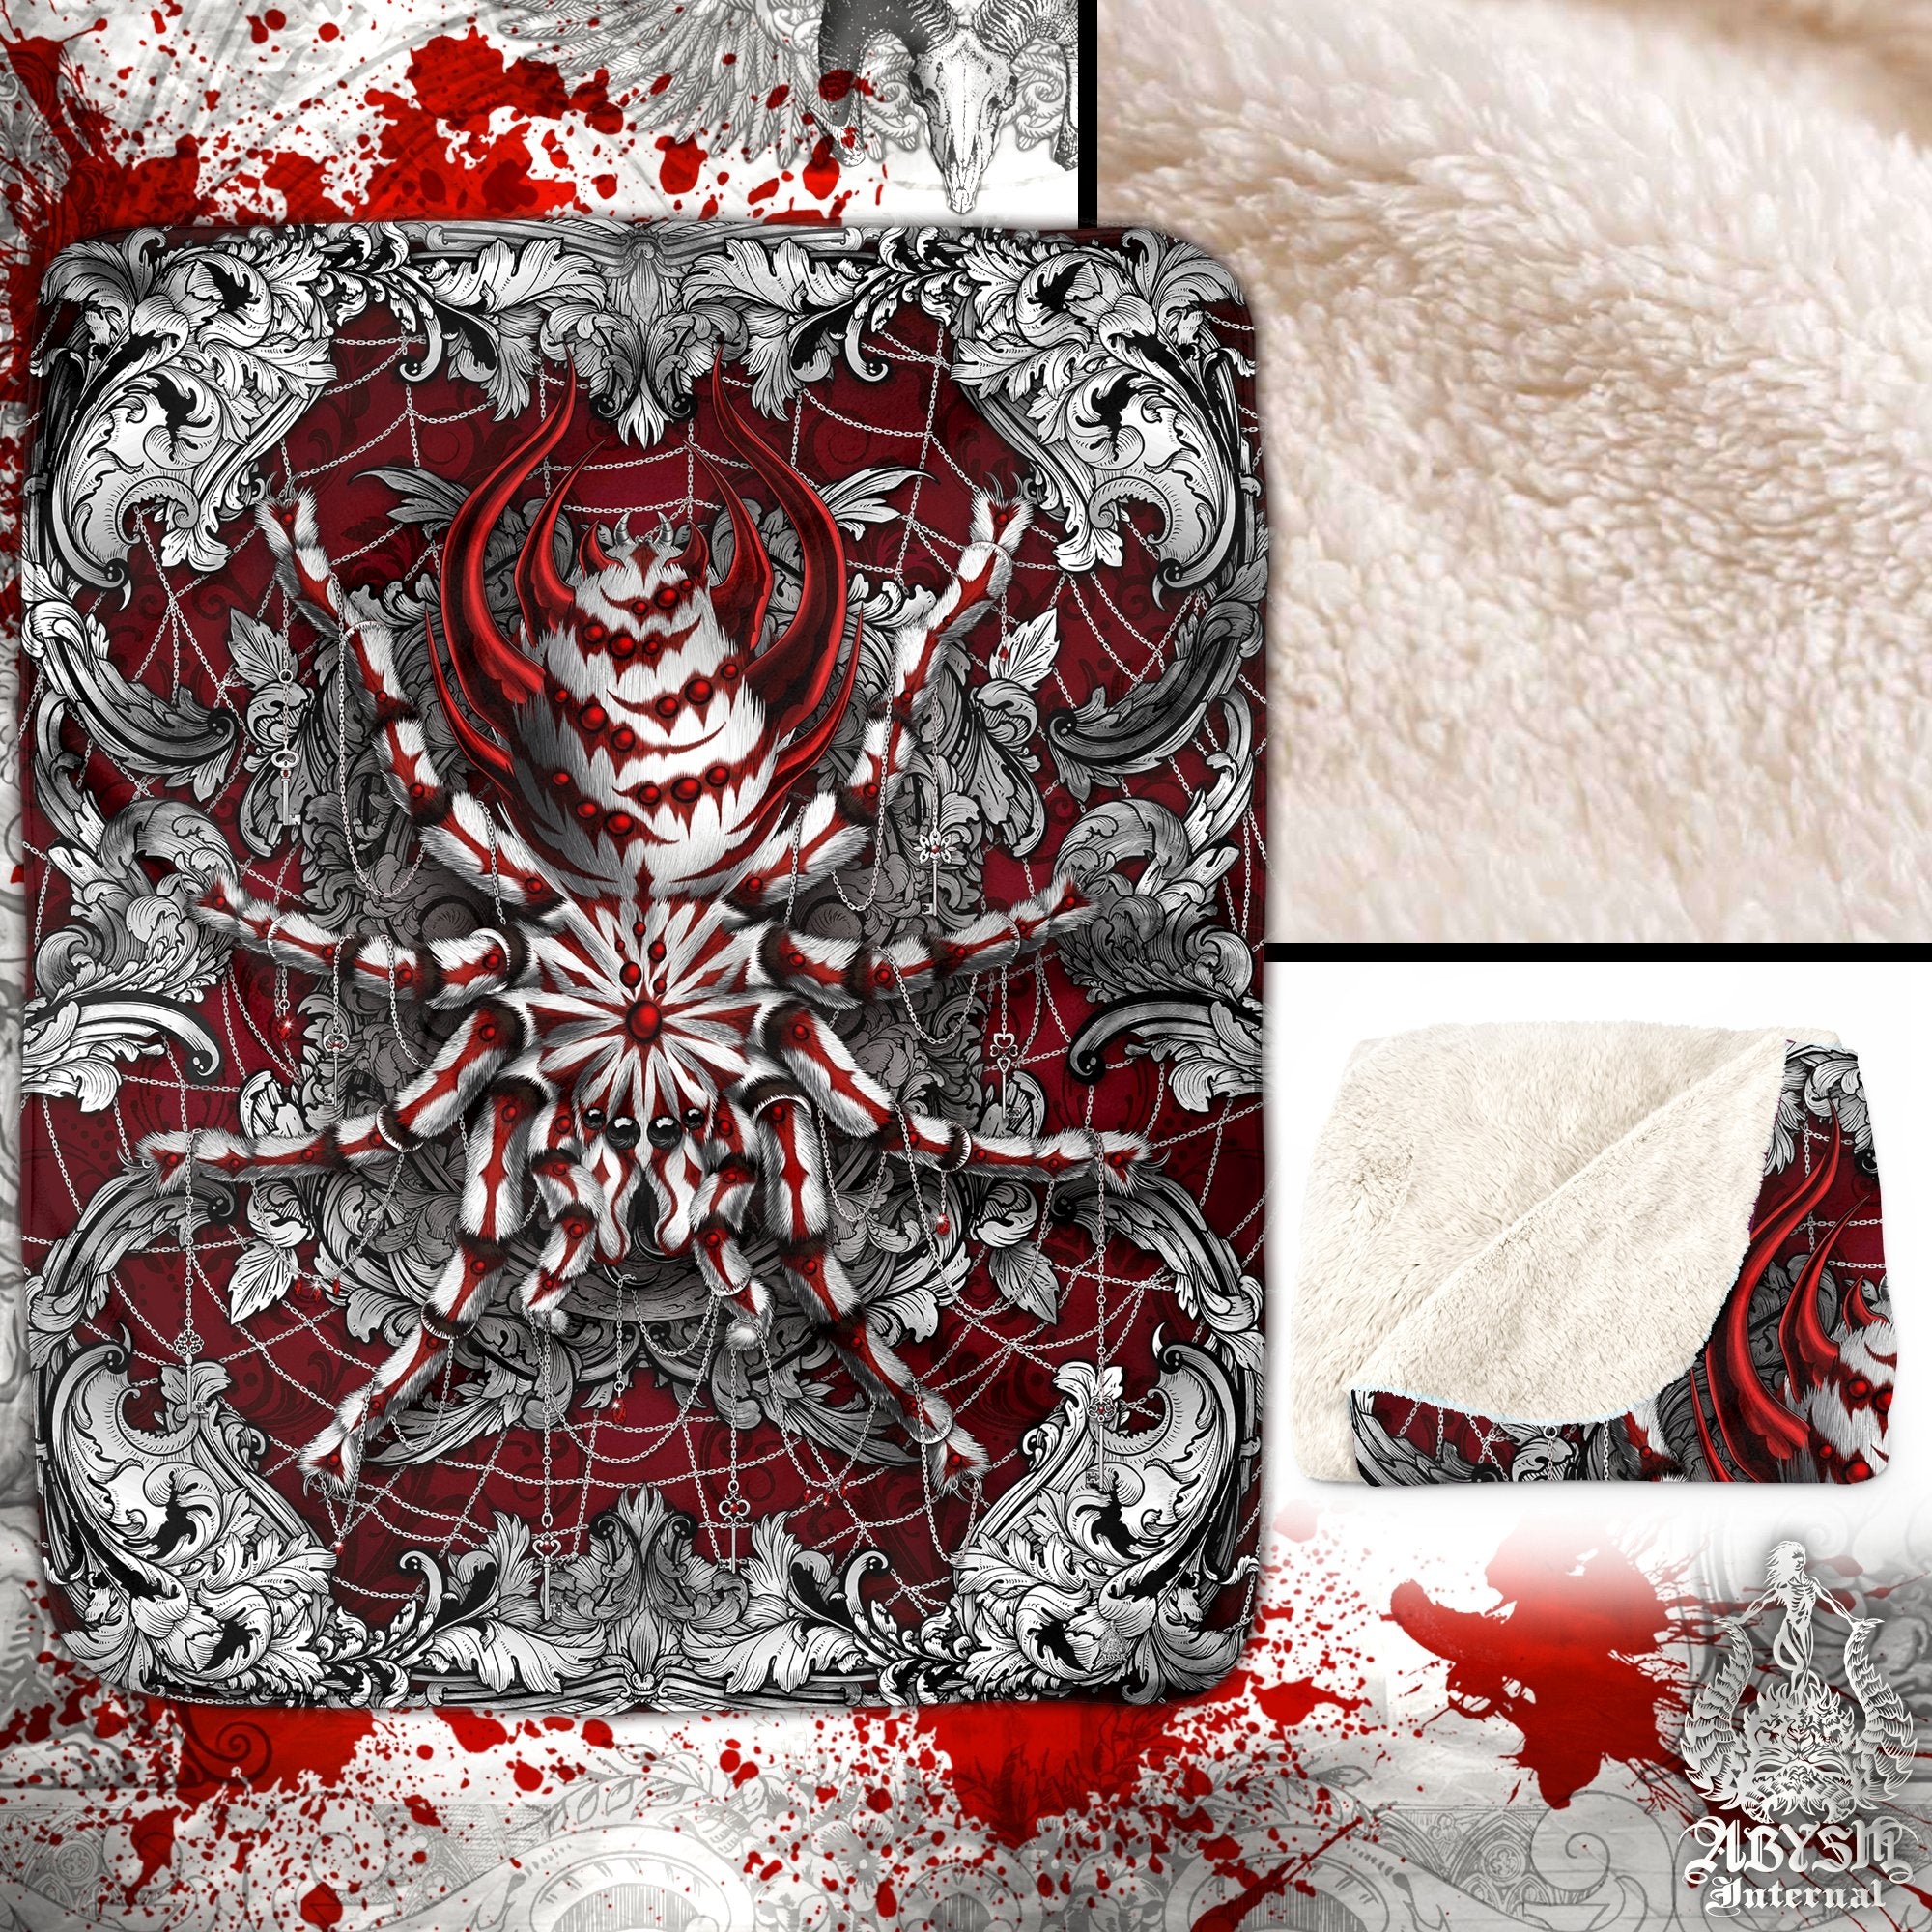 Spider Throw Fleece Blanket, Alternative Home Decor, Unique Gift - Silver Red, Tarantula Art - Abysm Internal